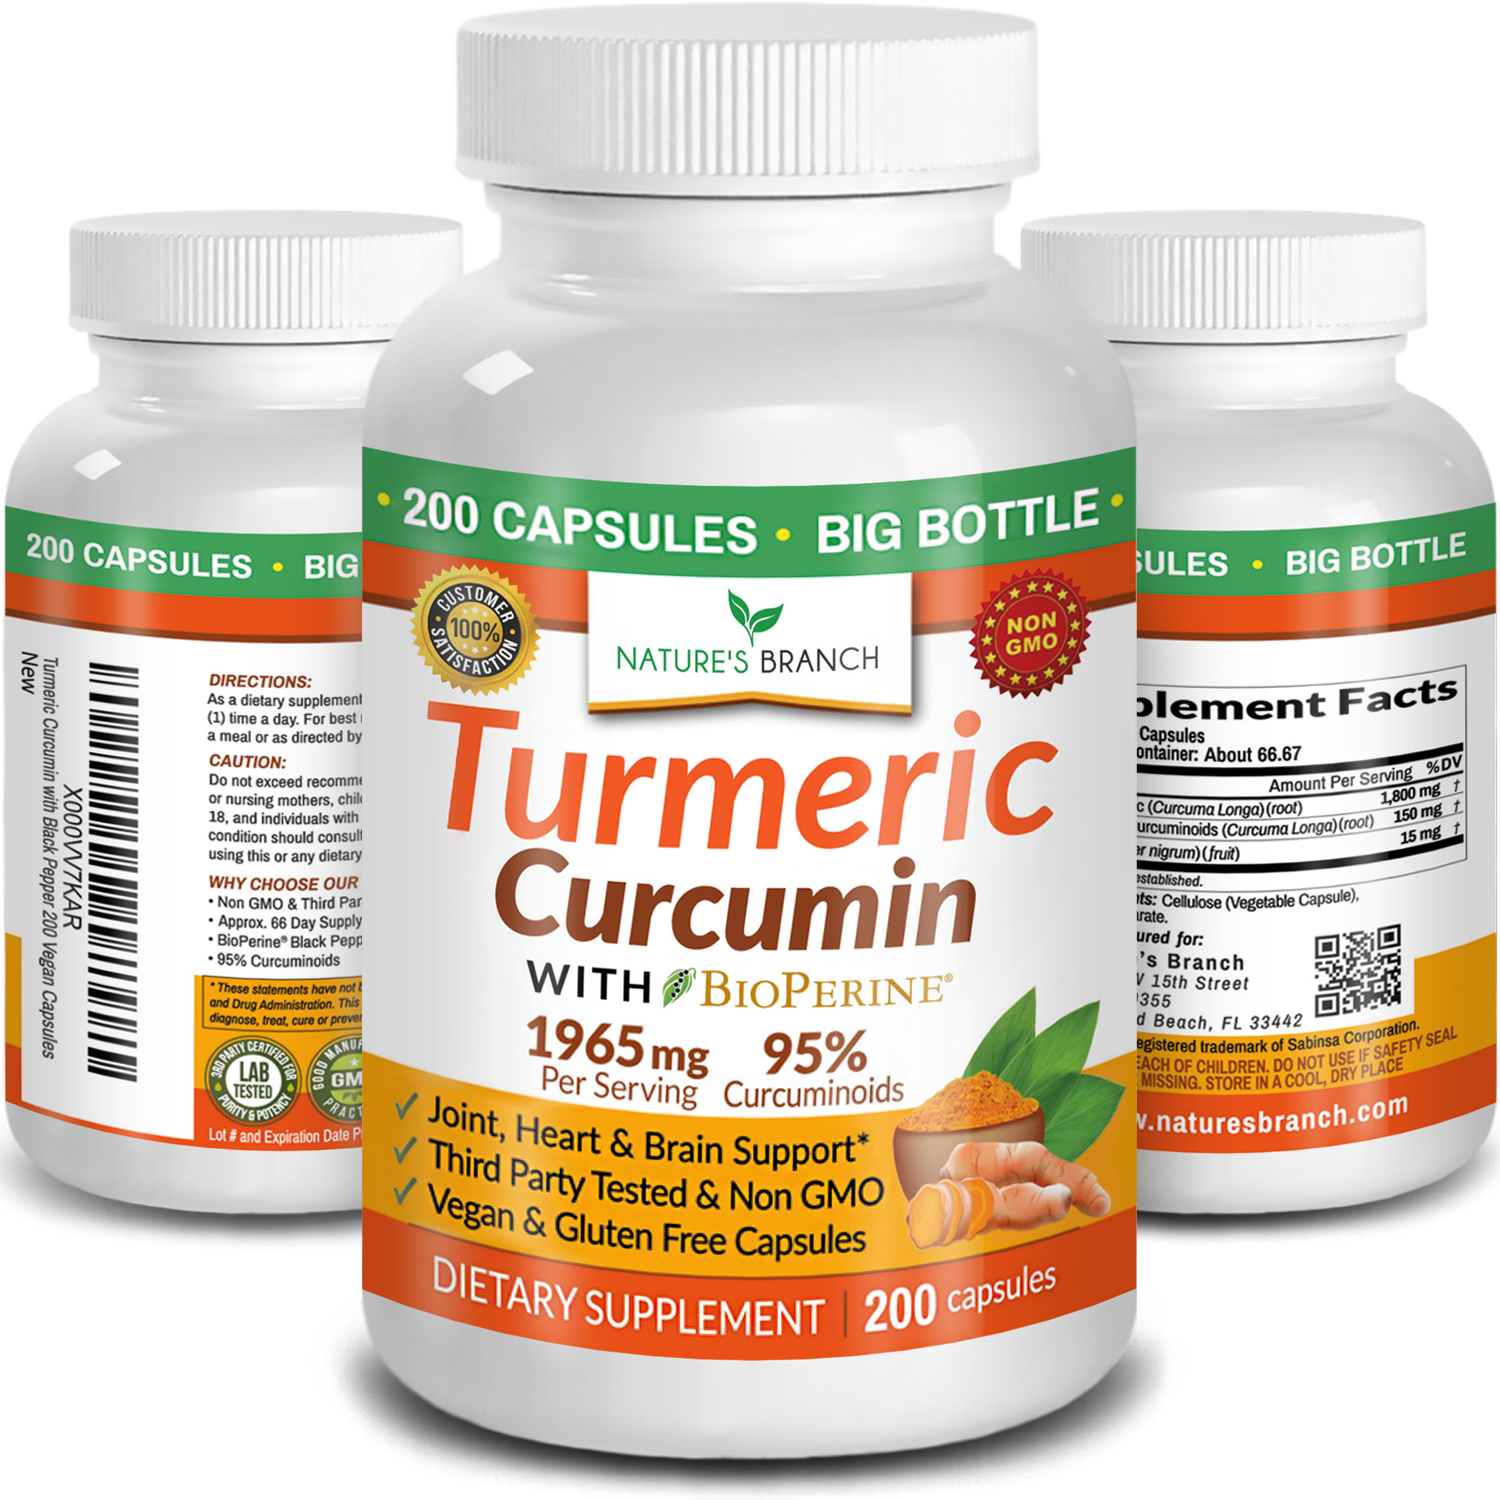 Nature's Branch Turmeric Curcumin and BioPerine supplement bottle